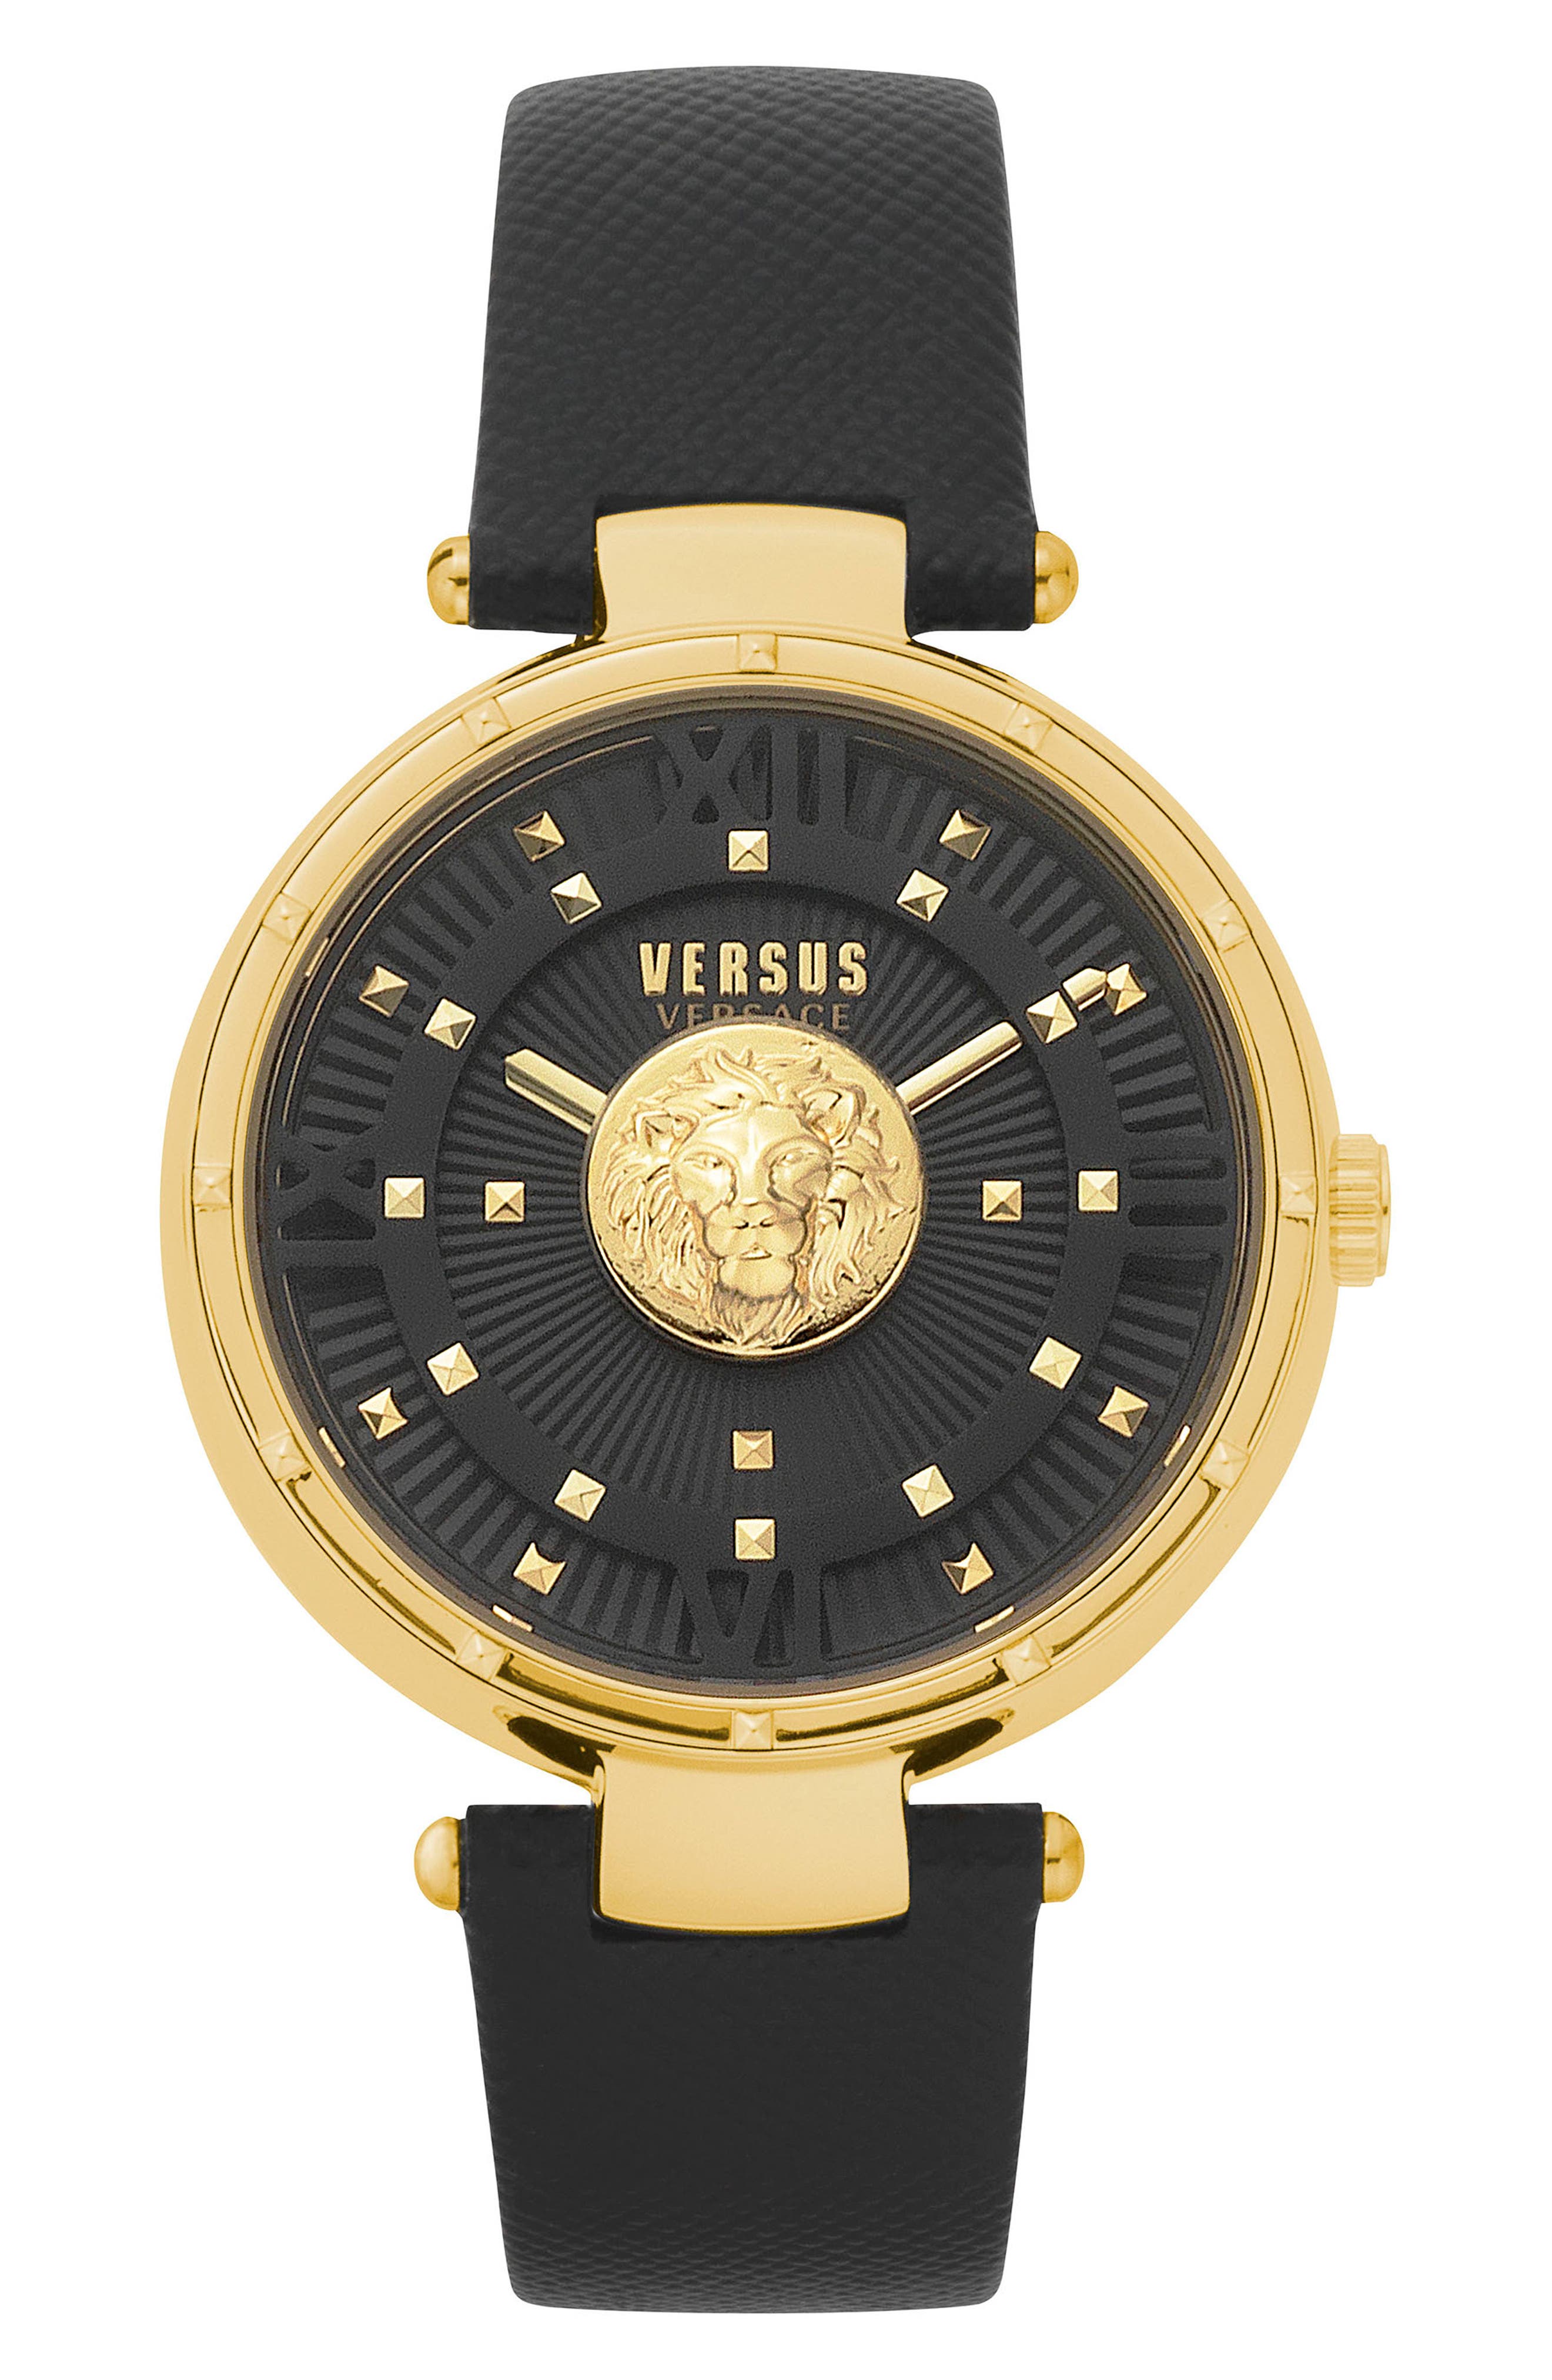 versus by versace watch review